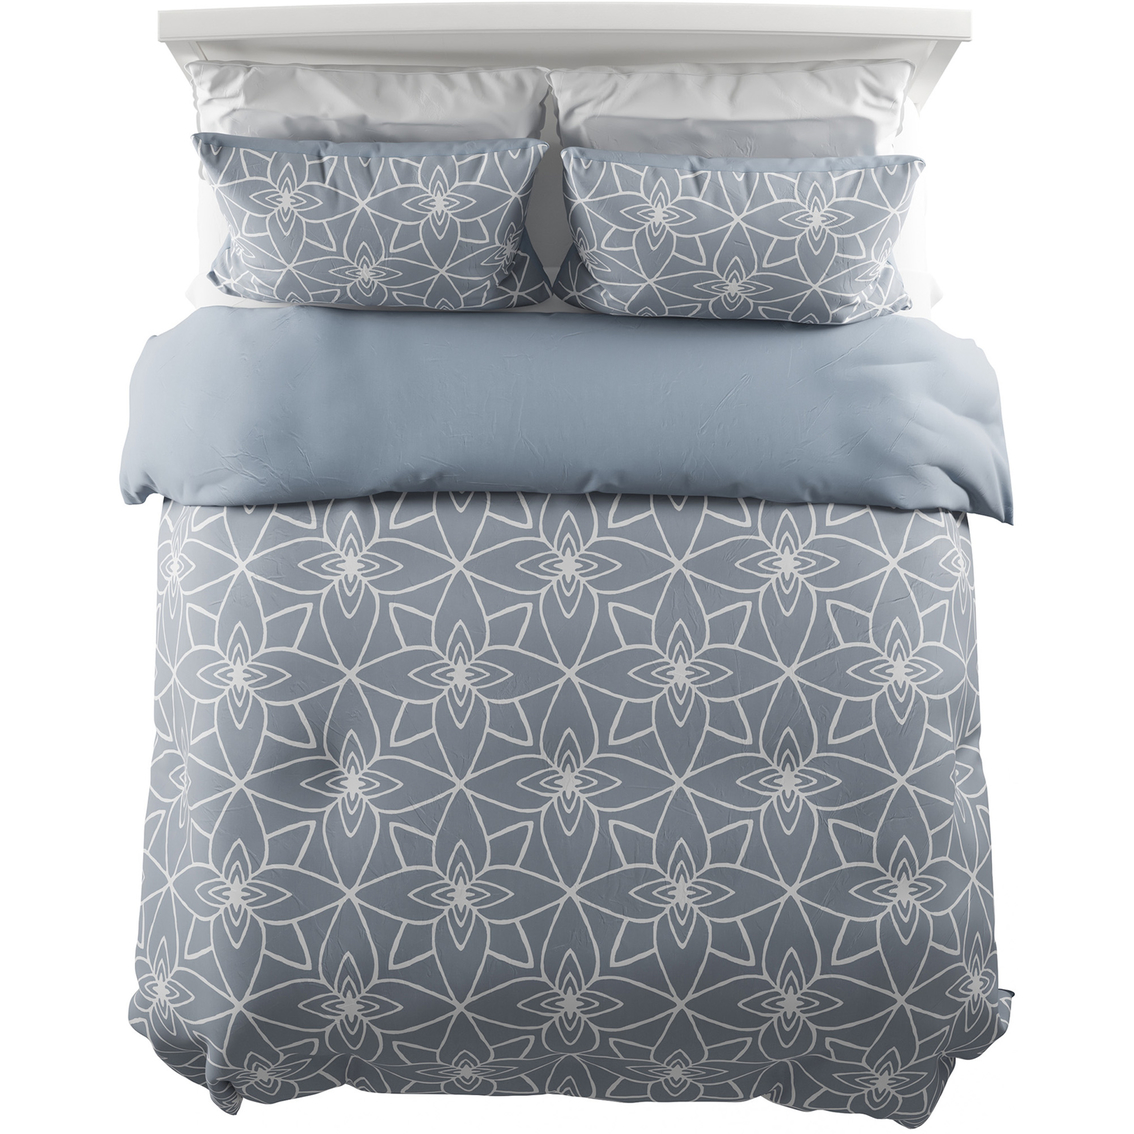 Lavish Home 3 pc. Comforter Set with Exclusive Stargaze Design - Image 4 of 7